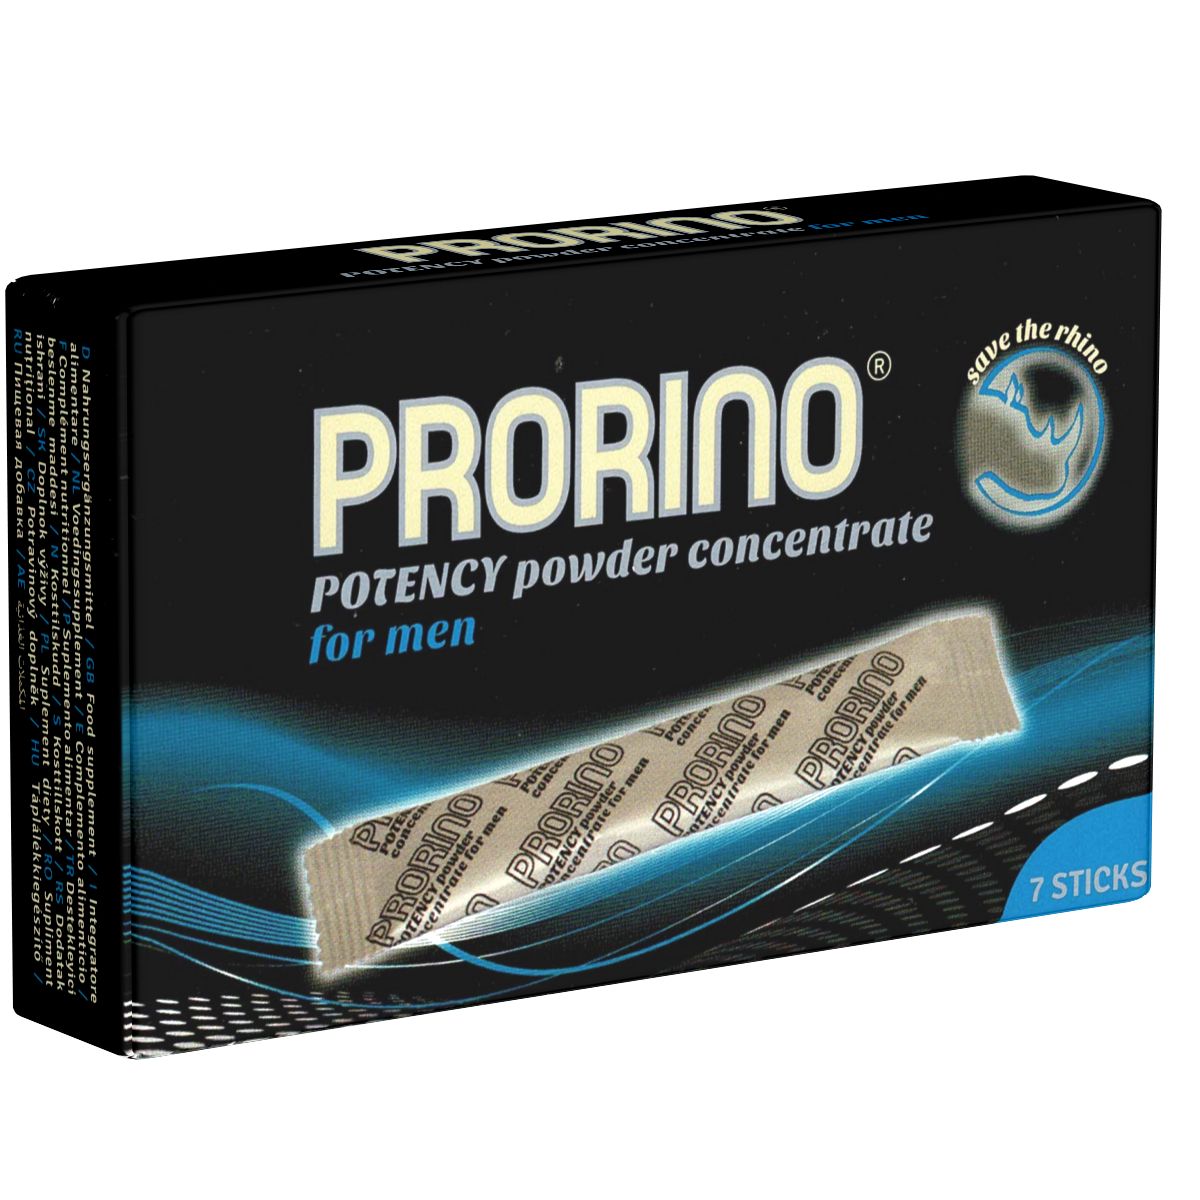 Prorino *Potency Powder Concentrate* for men